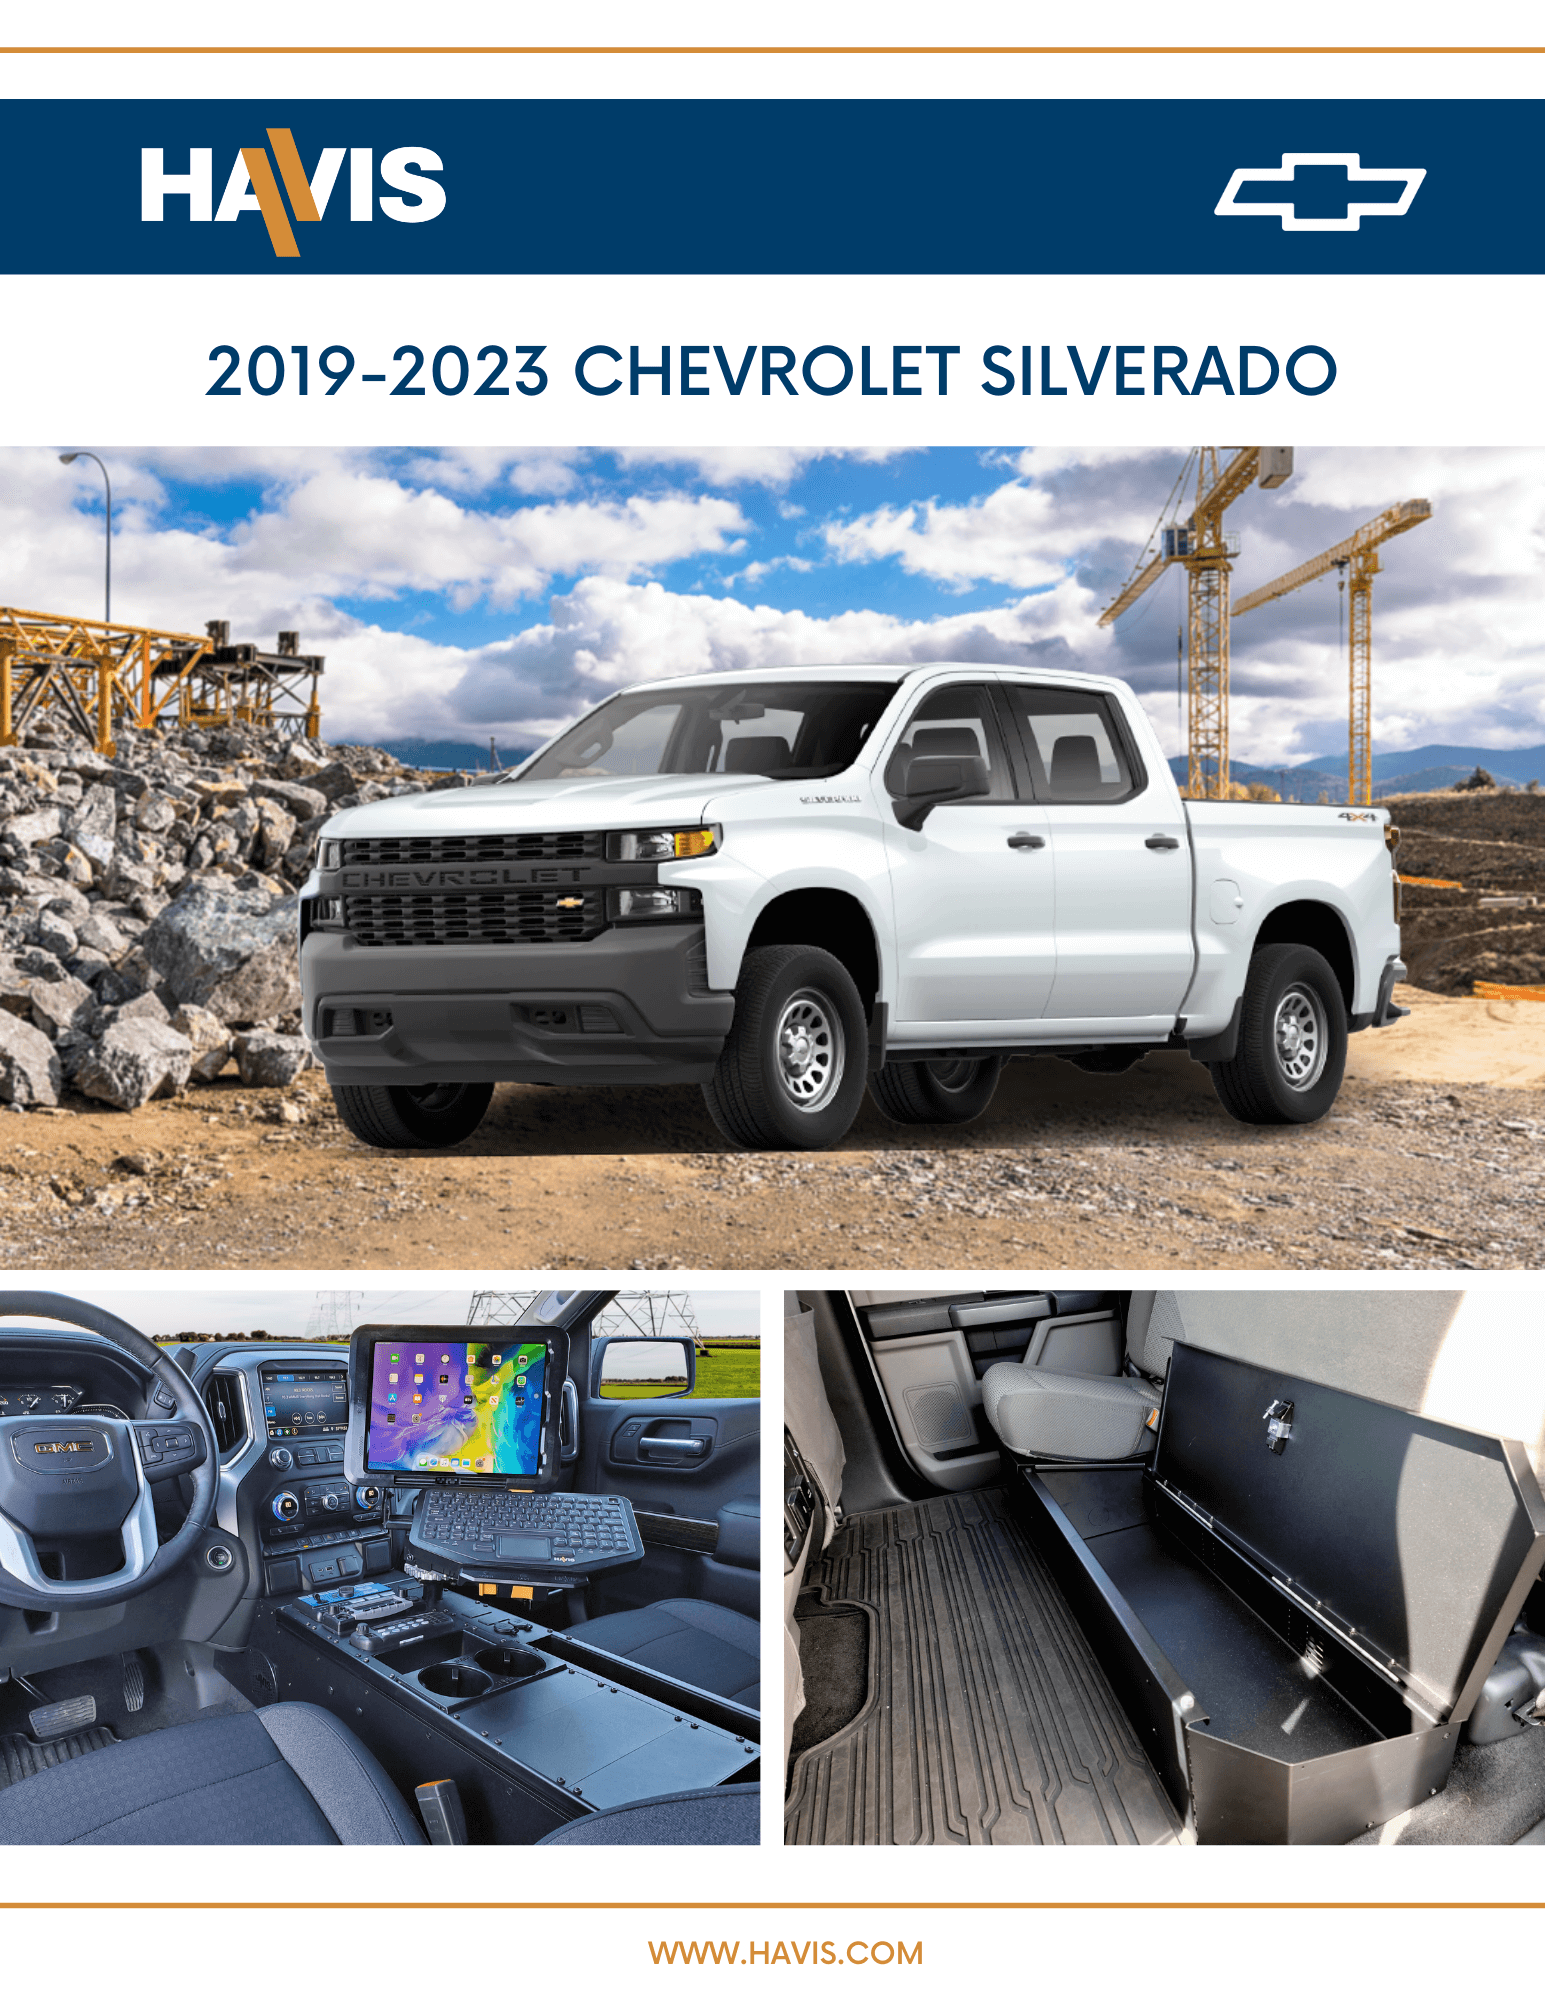 2019-2023 Chevrolet Silverado – Work Truck Teaser Sheet